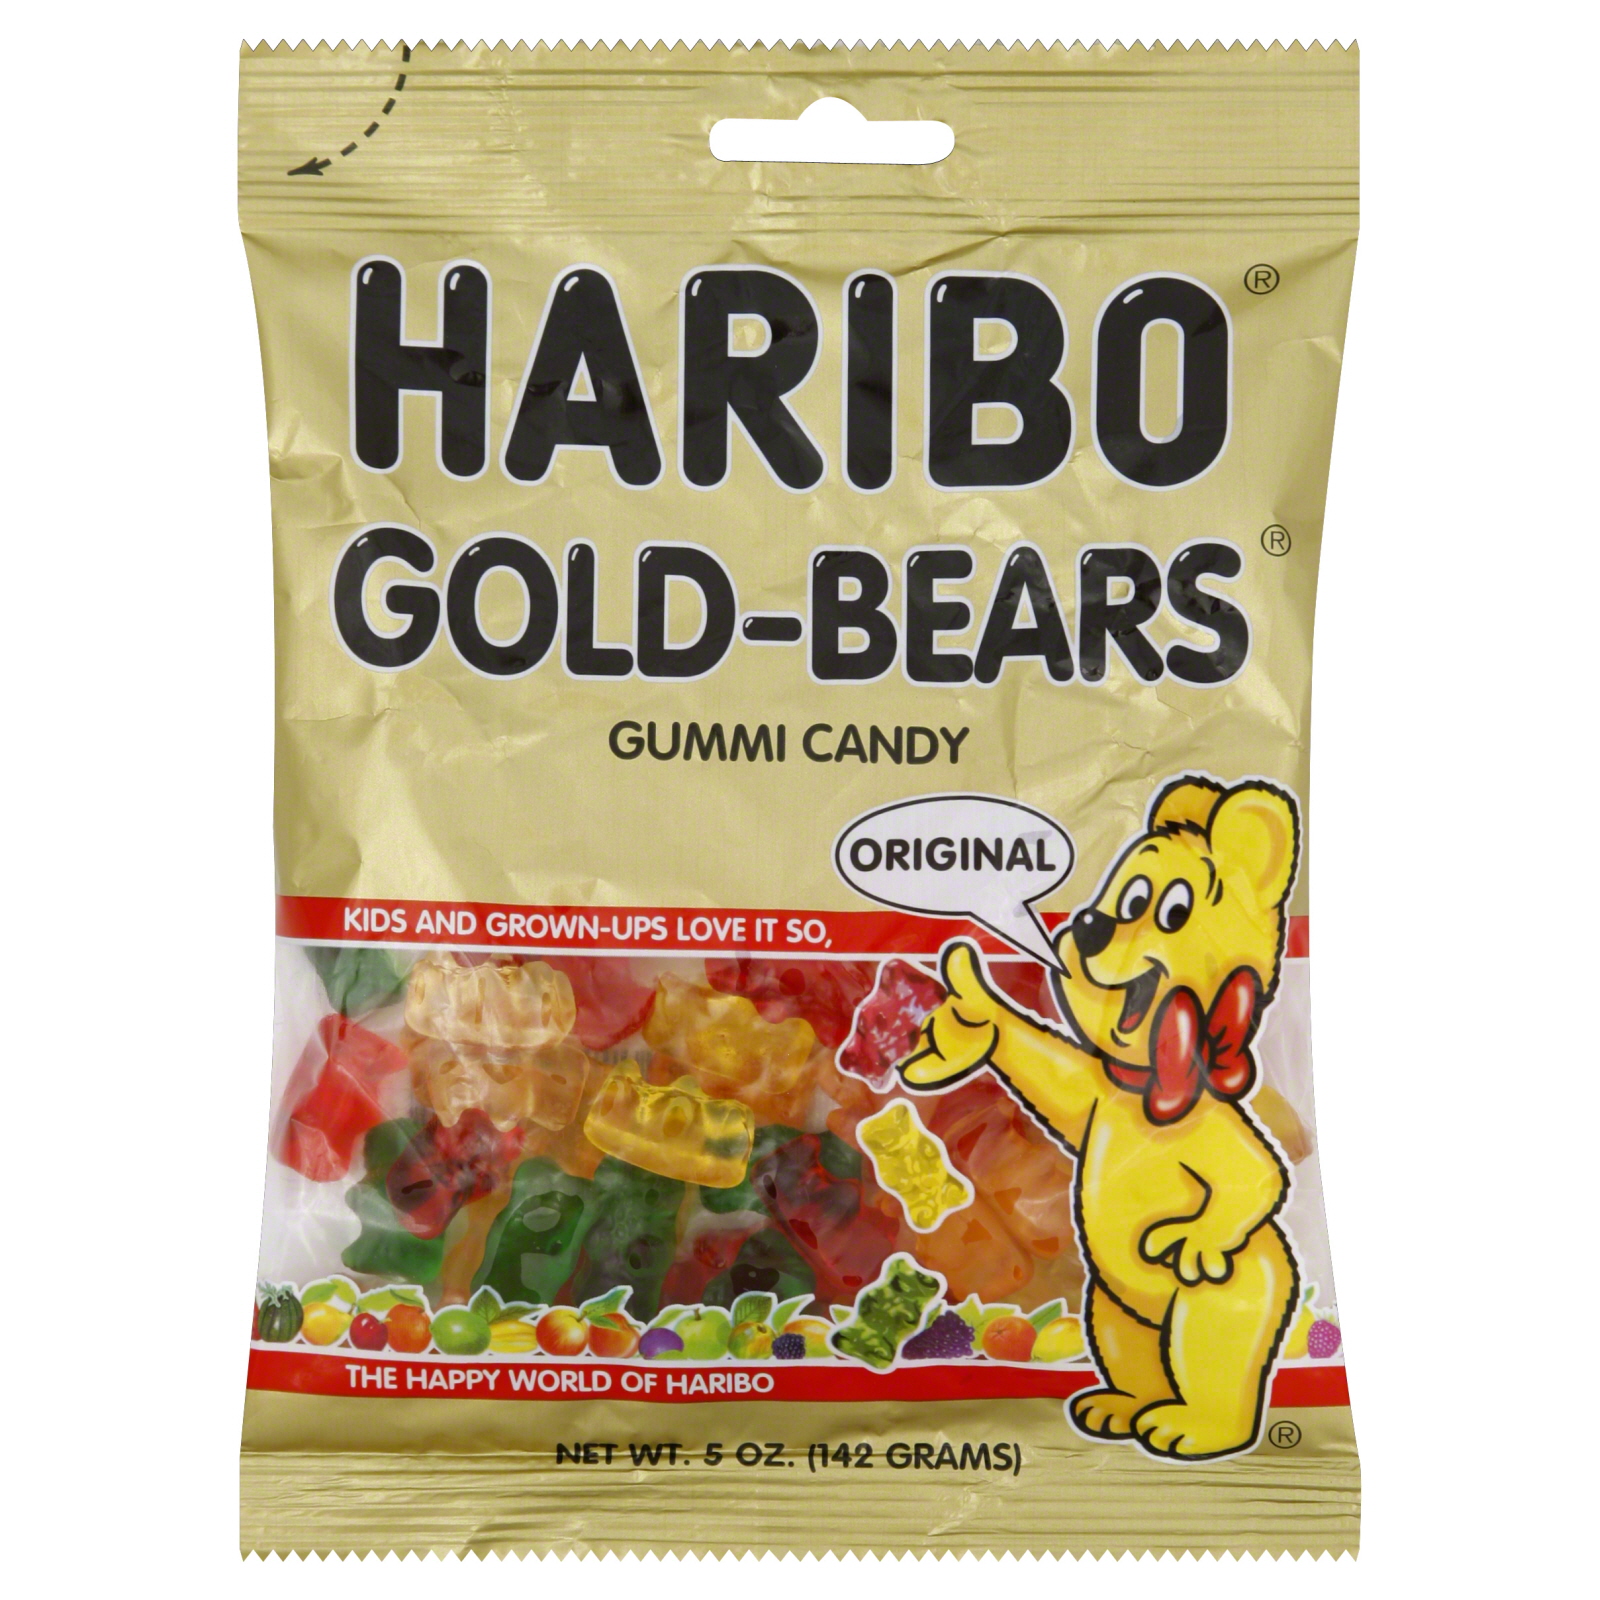 Haribo Gold-Bears Gummi Candy, Original, 5 oz (142 g)